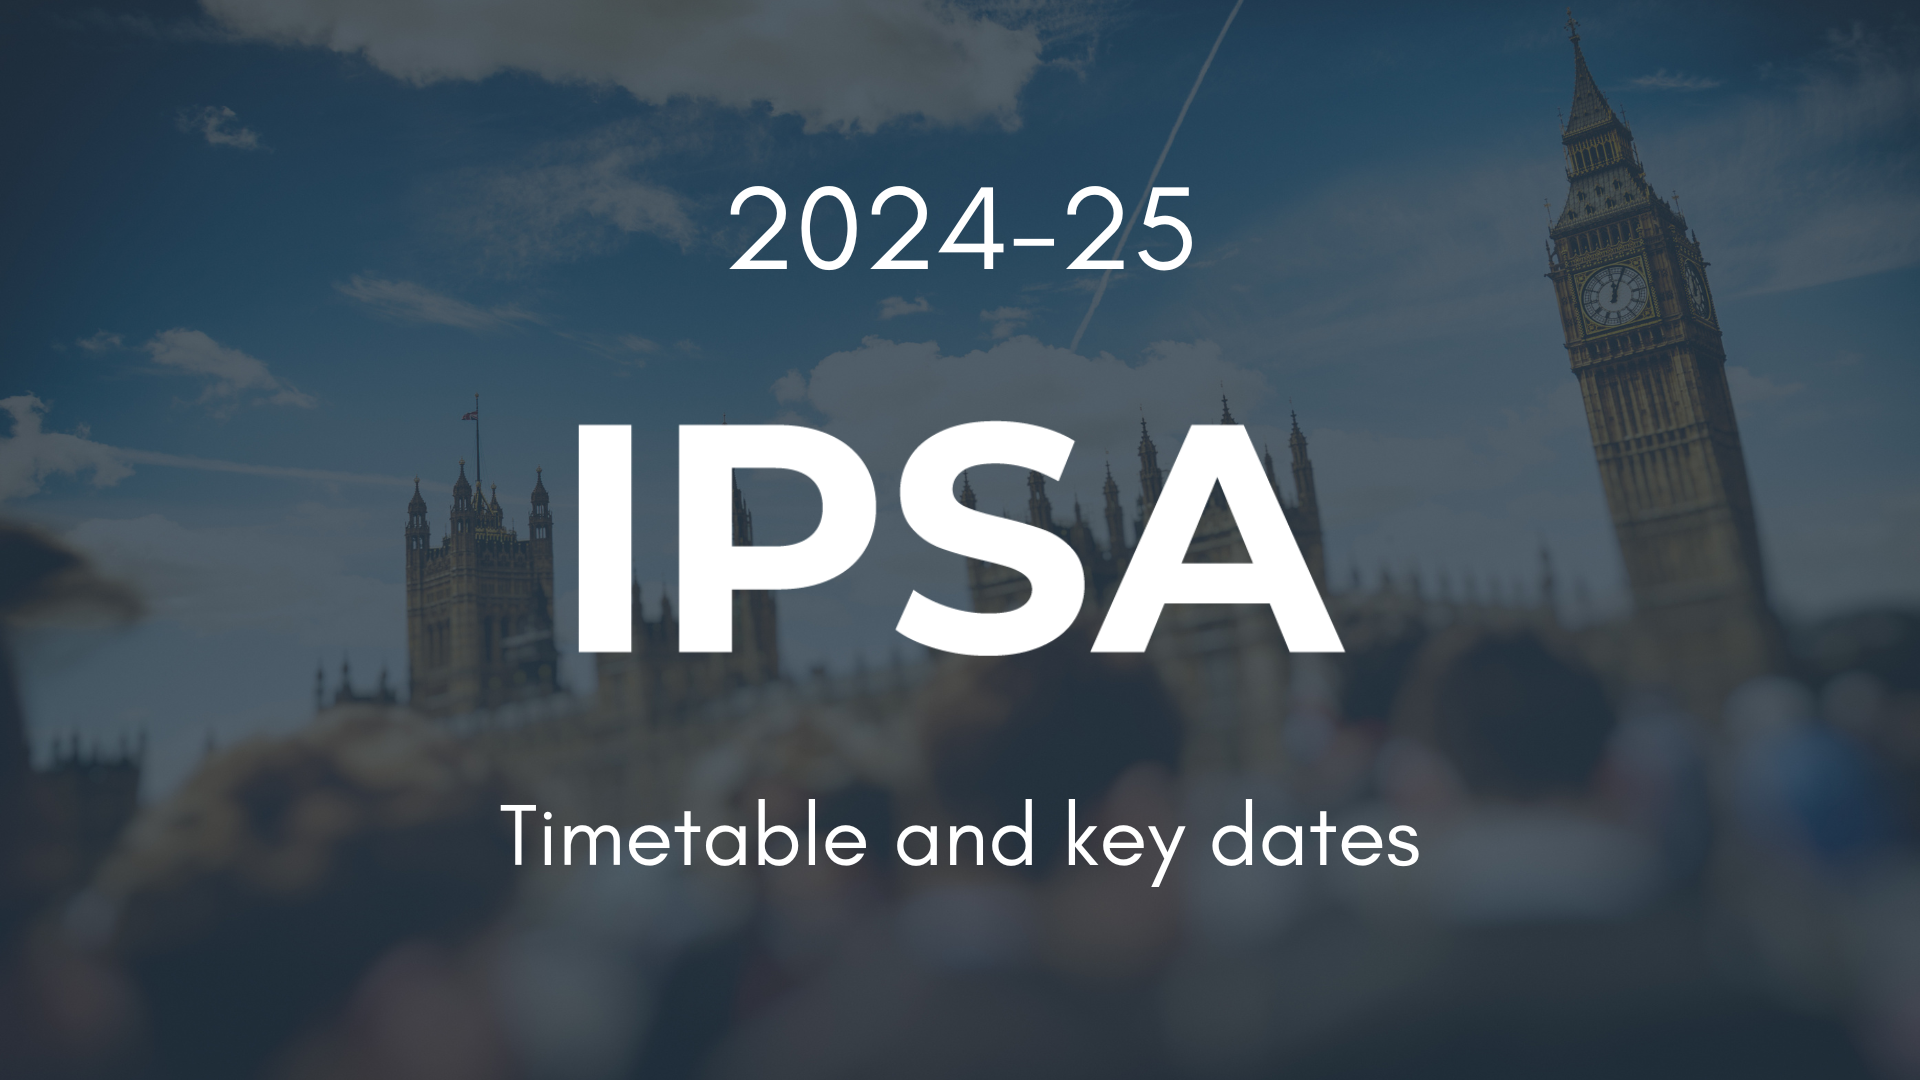 IPSA Timetable and key dates calendar 2024-25 title